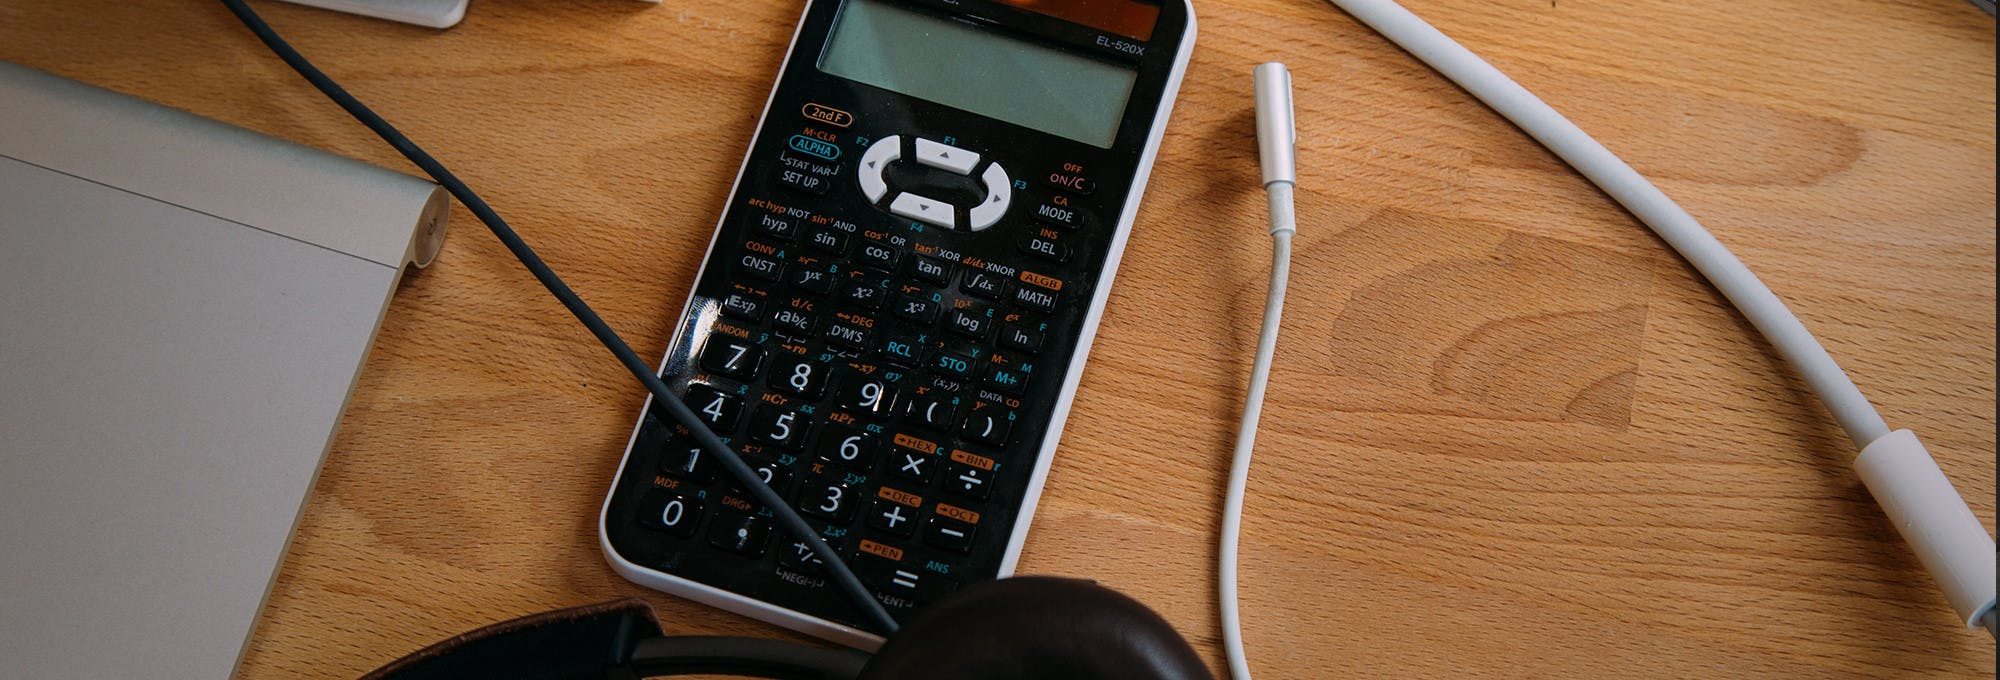 calculator on a computer desk 